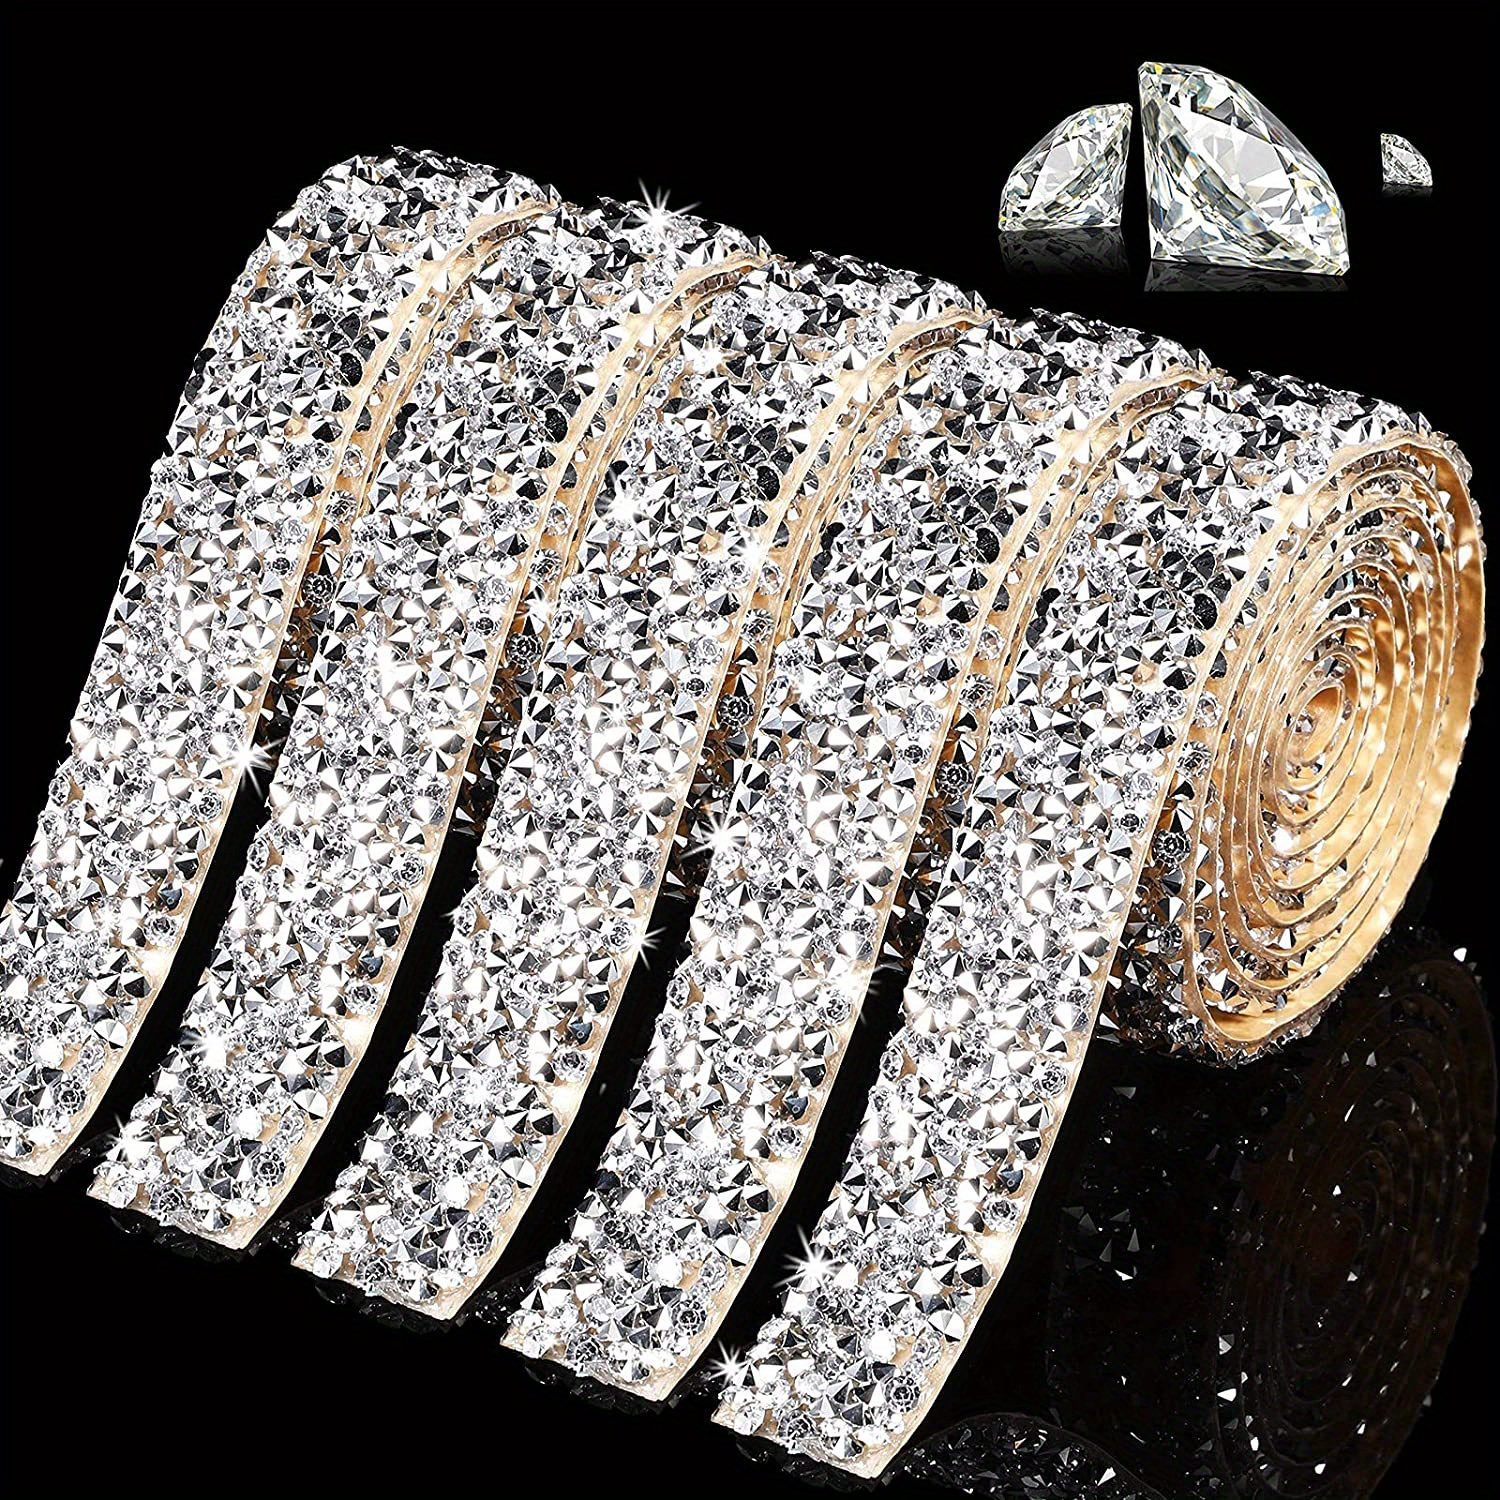 4 Rolls Crystal Rhinestone Diamond Ribbon Strips, Self Adhesive Bling Wrap Rolls Rhinestones Tapes for Shoes Clothes, Cakes, Phone, Wedding Decor DIY